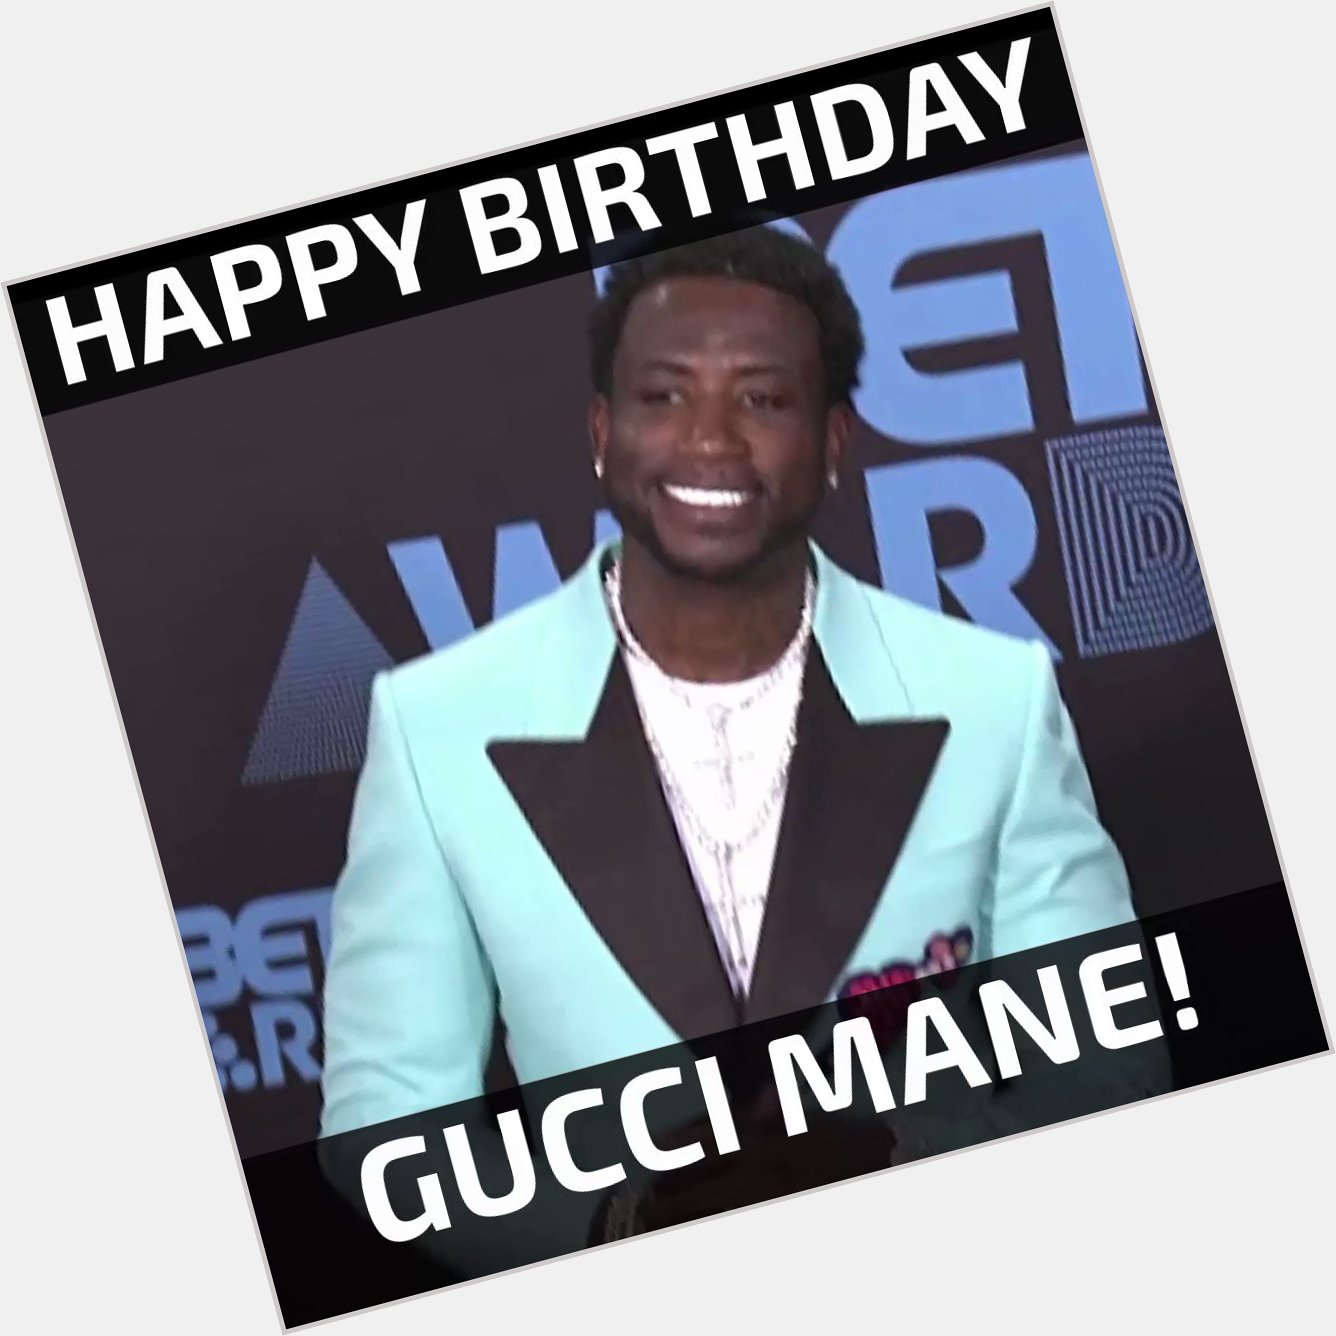 Happy Birthday, Gucci Mane!  